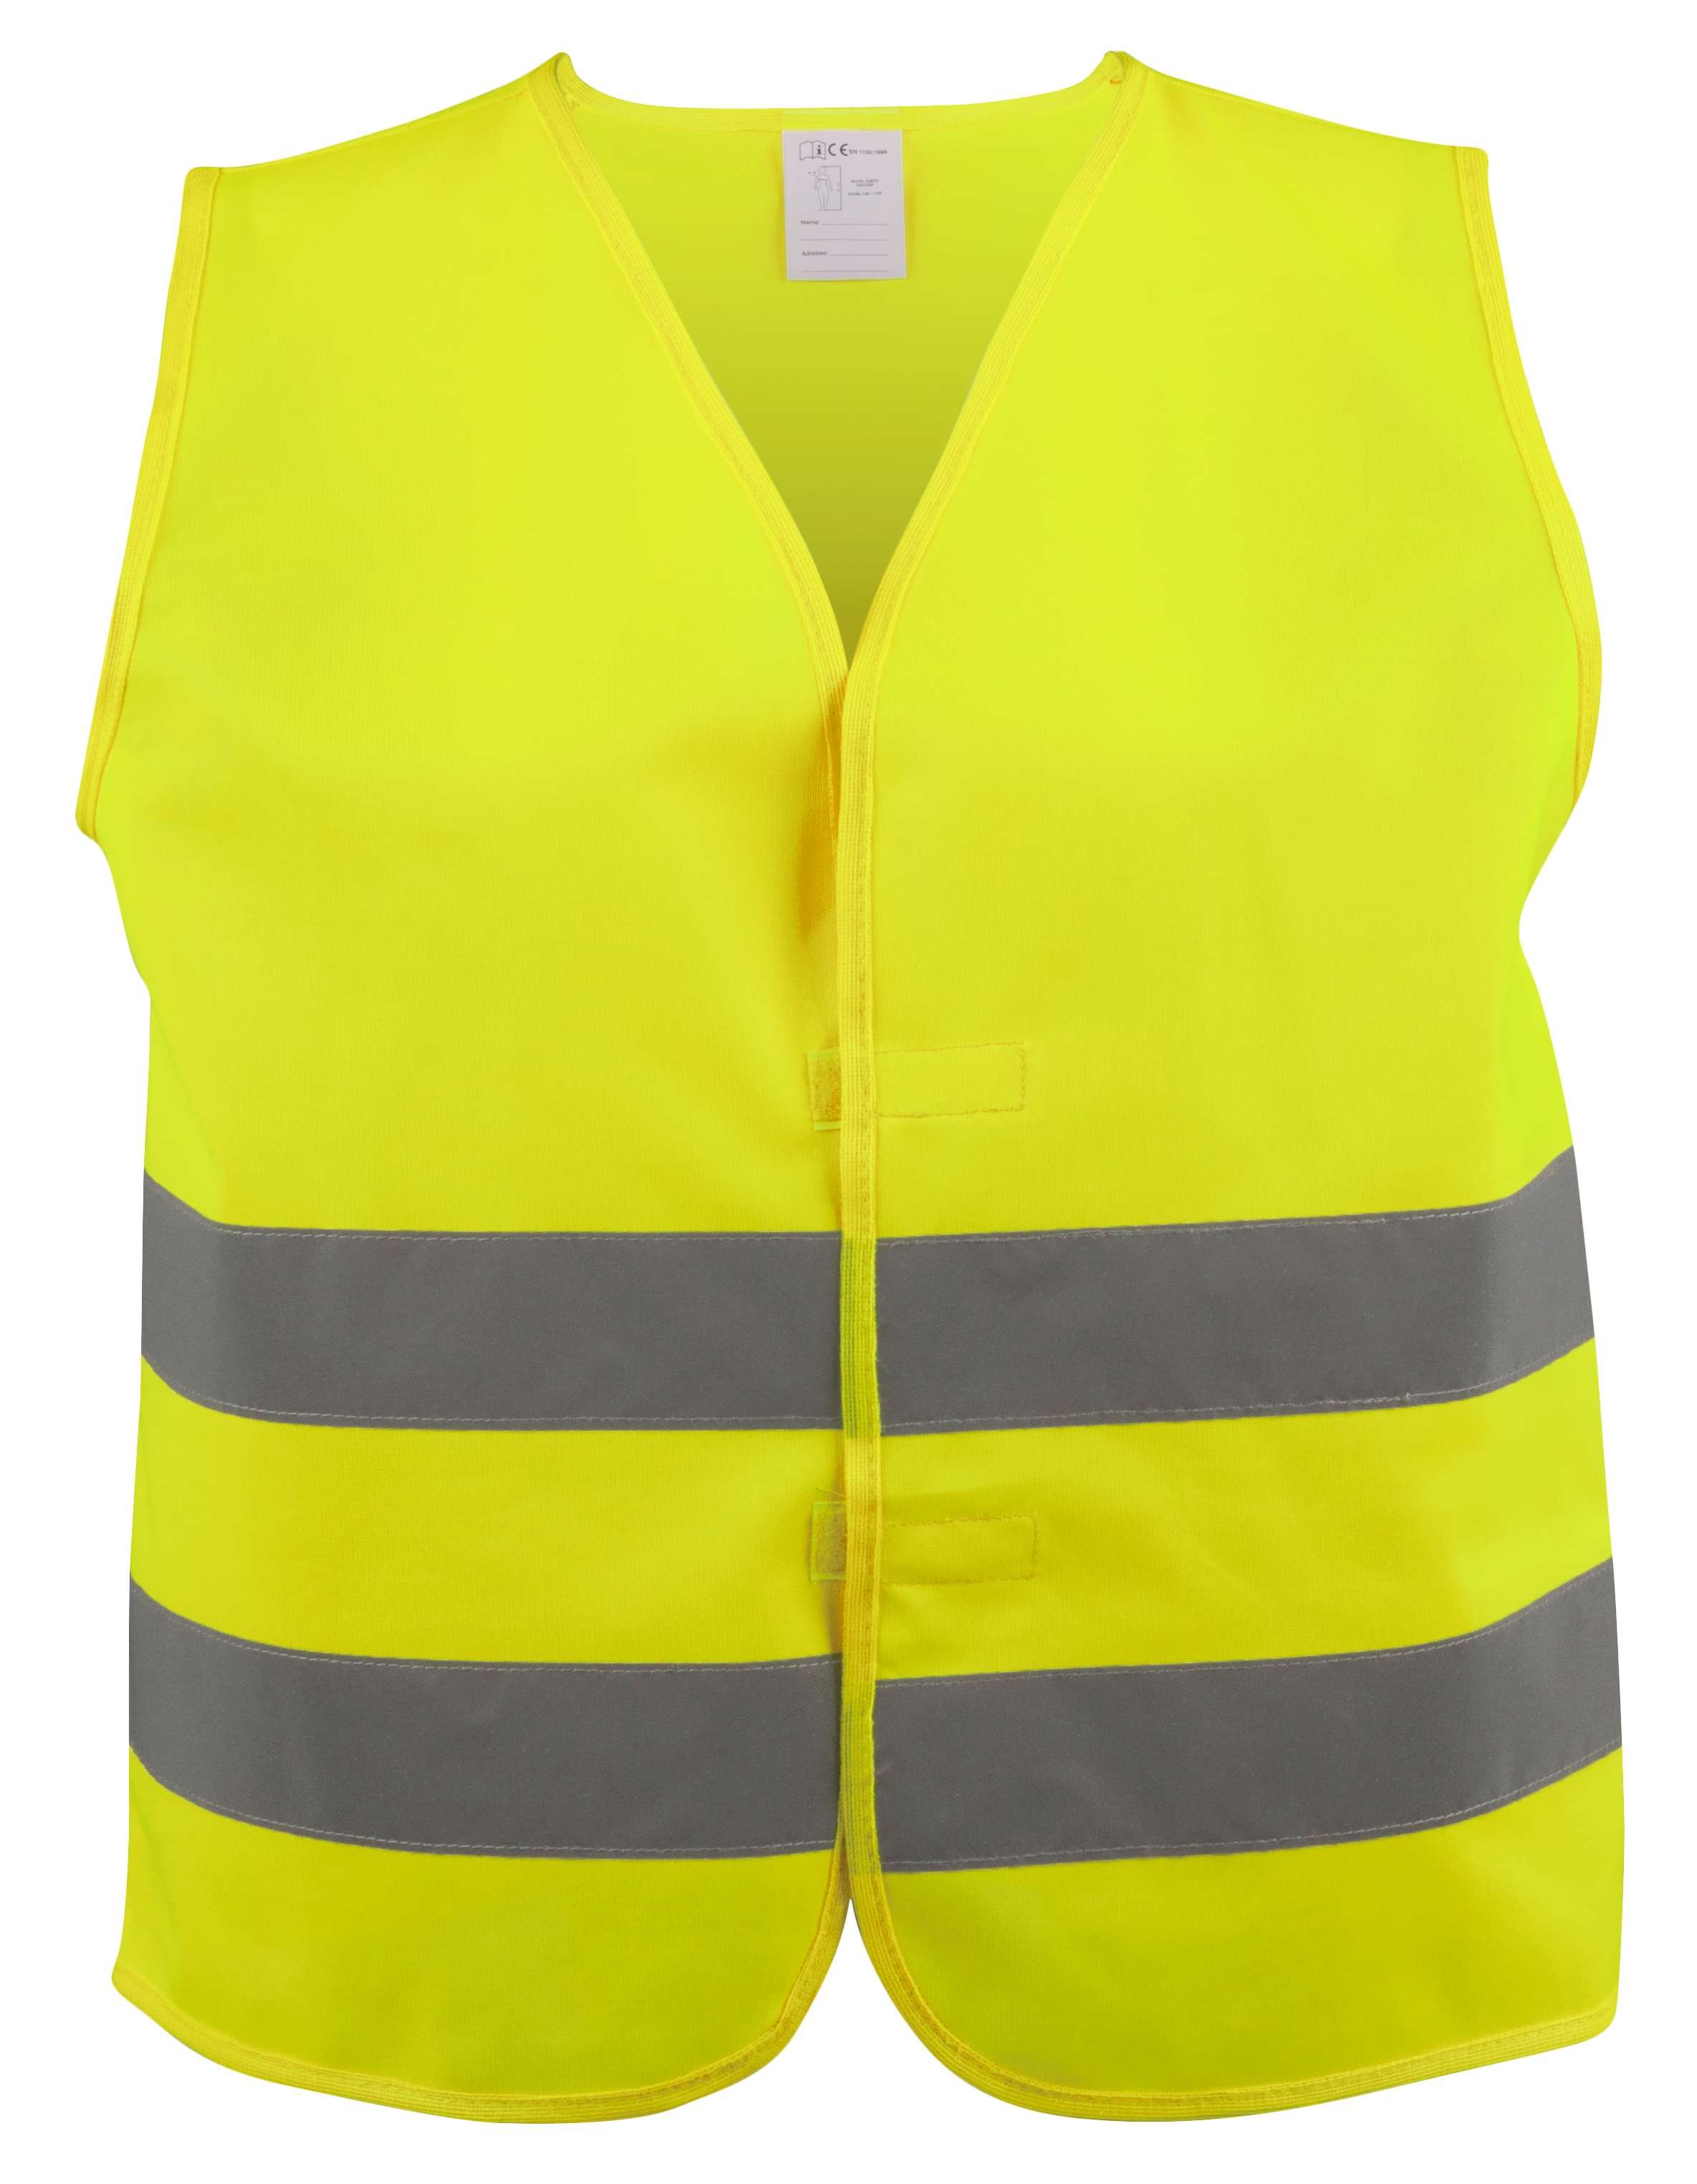 Safety waistcoat, high visibility waistcoat car according to standard EN ISO 20471:2013, protective waistcoat, fluorescent waistcoat adult unisex XL (176-188 cm) yellow